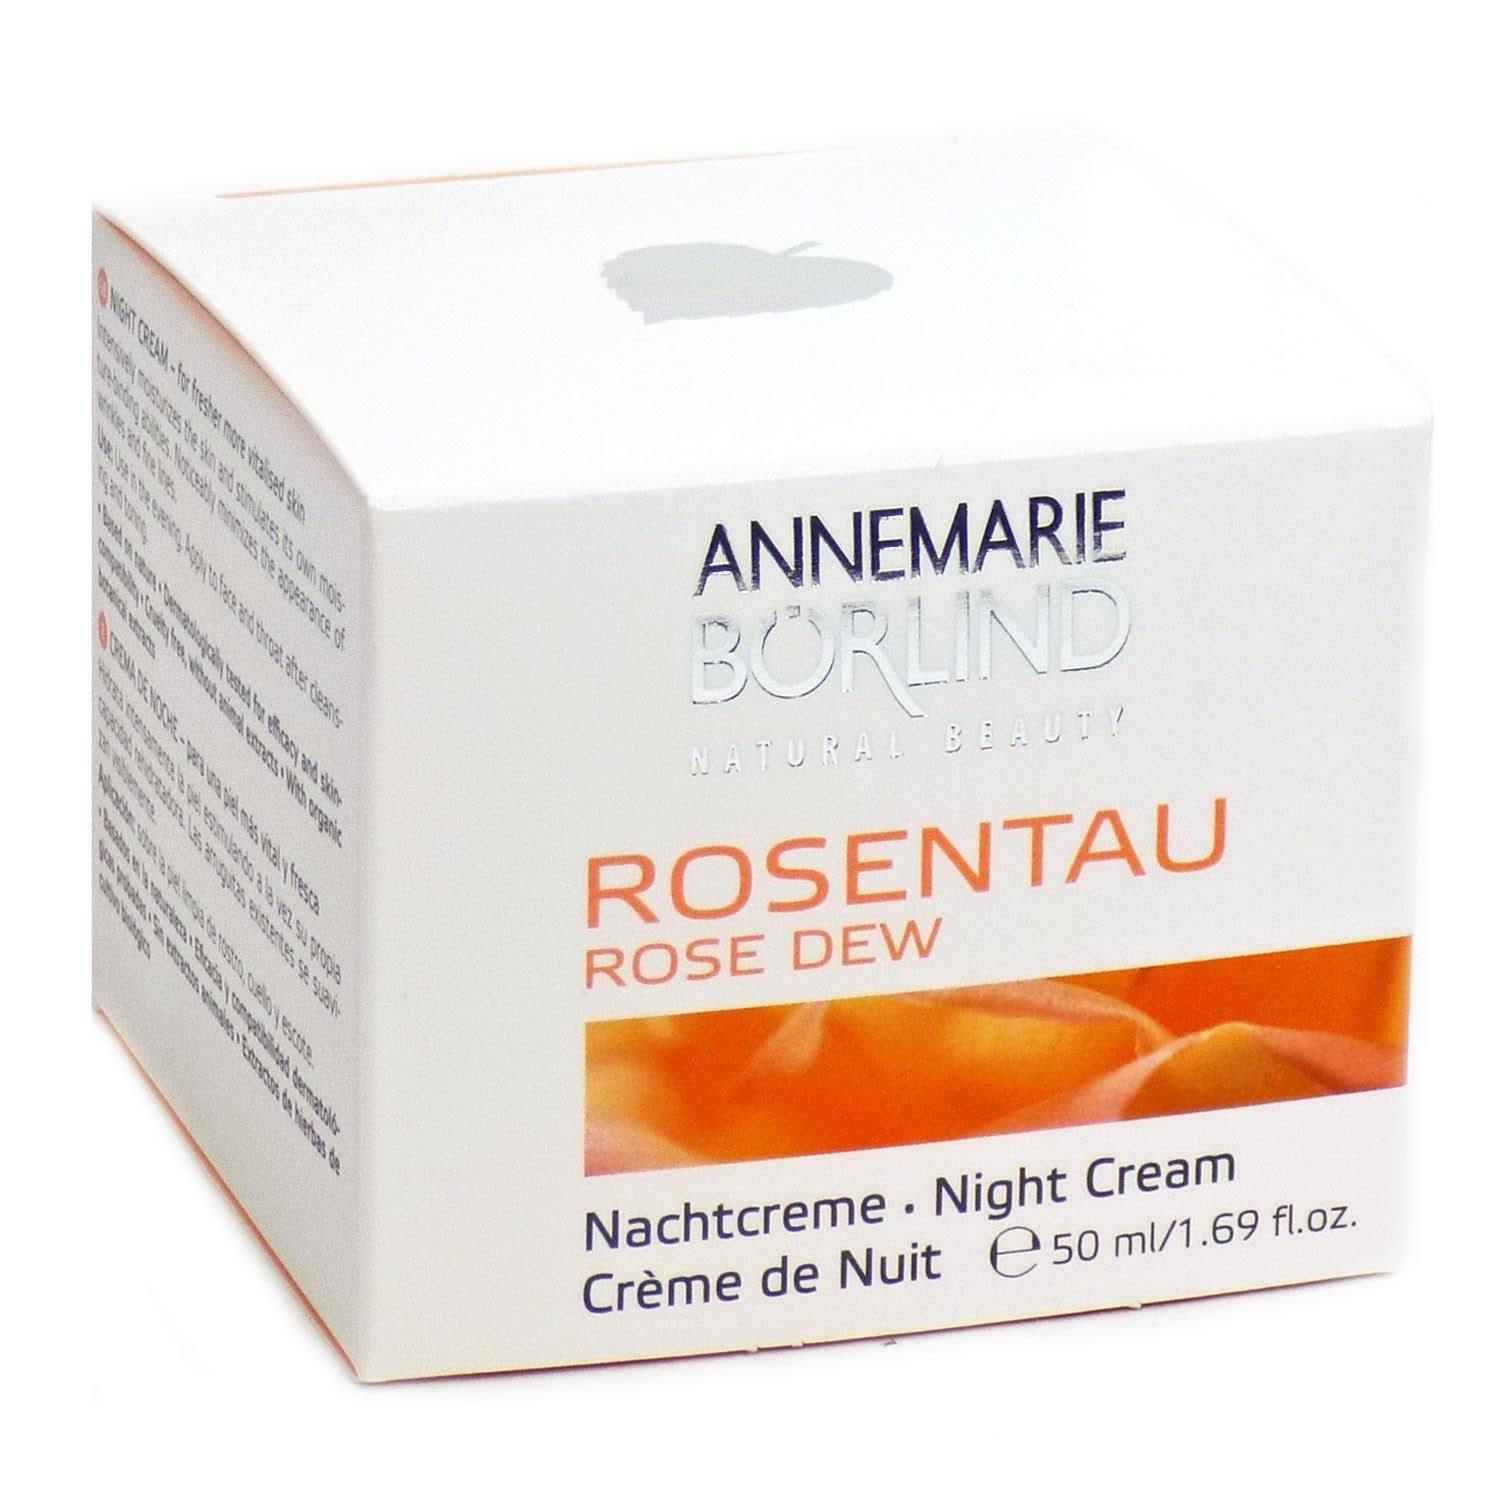 AnneMarie Borlind Hydro Stimulant Night Cream - Rose Dew